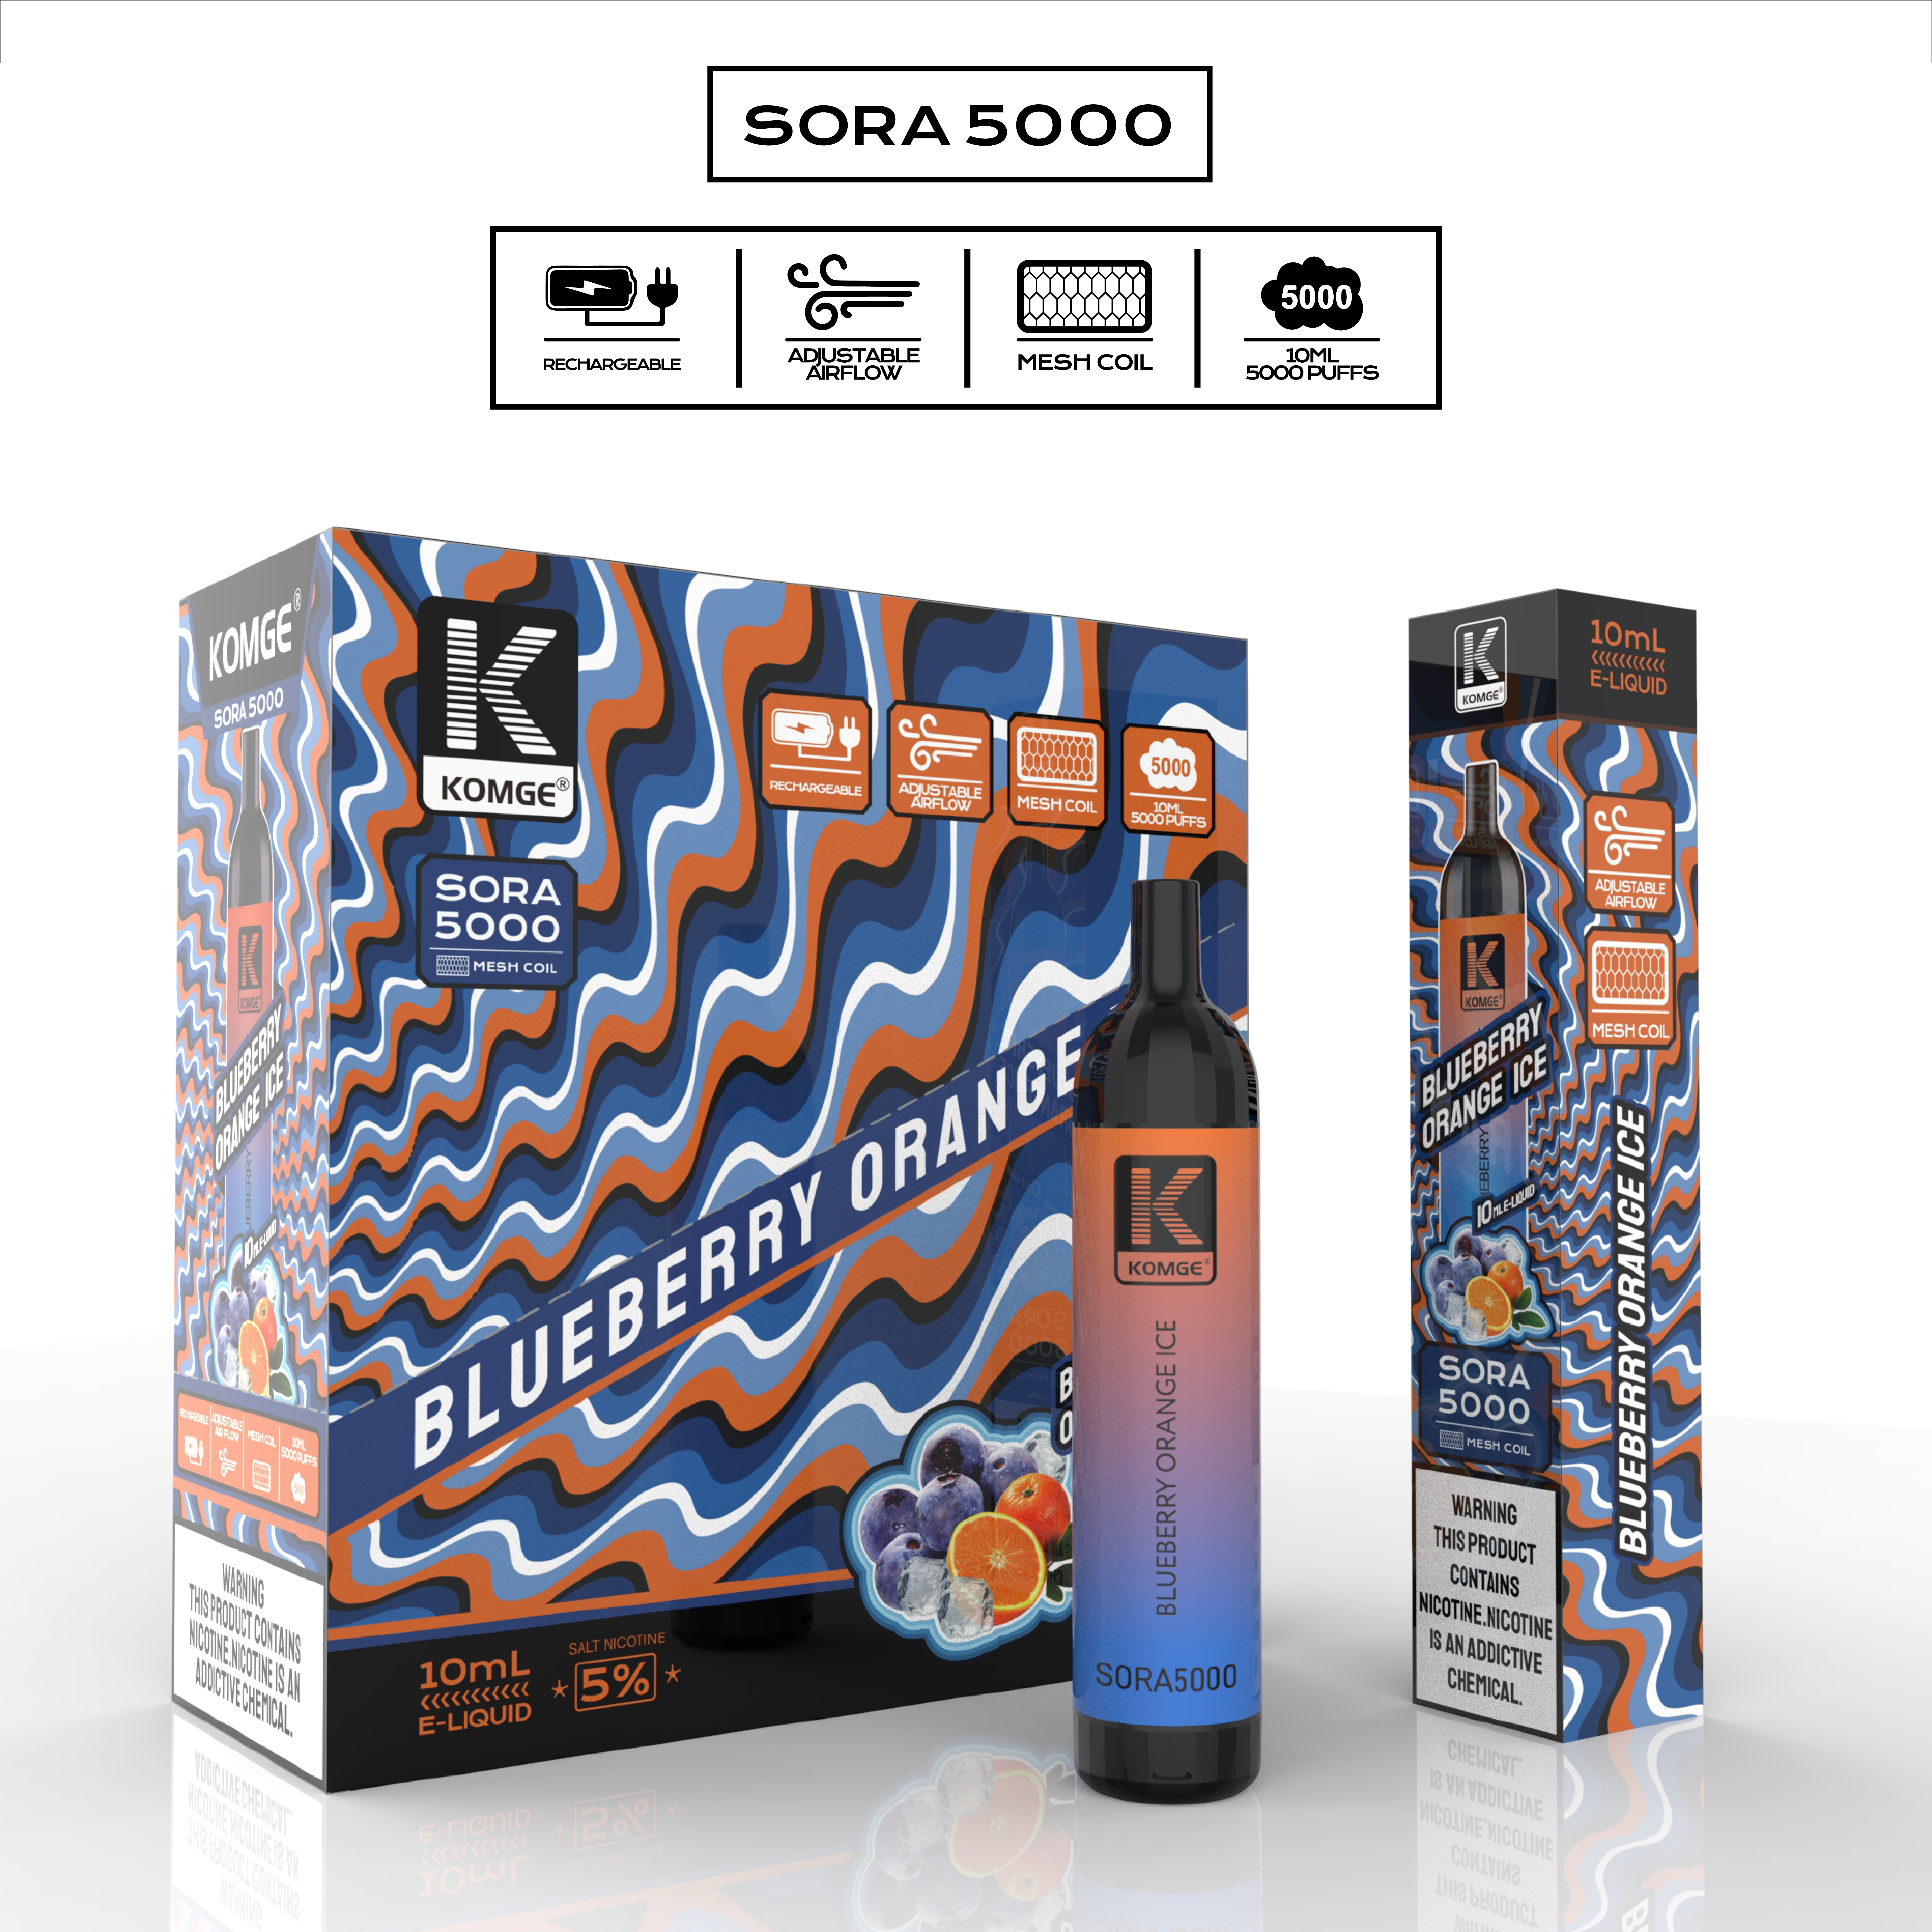 SORA 5000-Blueberry orange ice